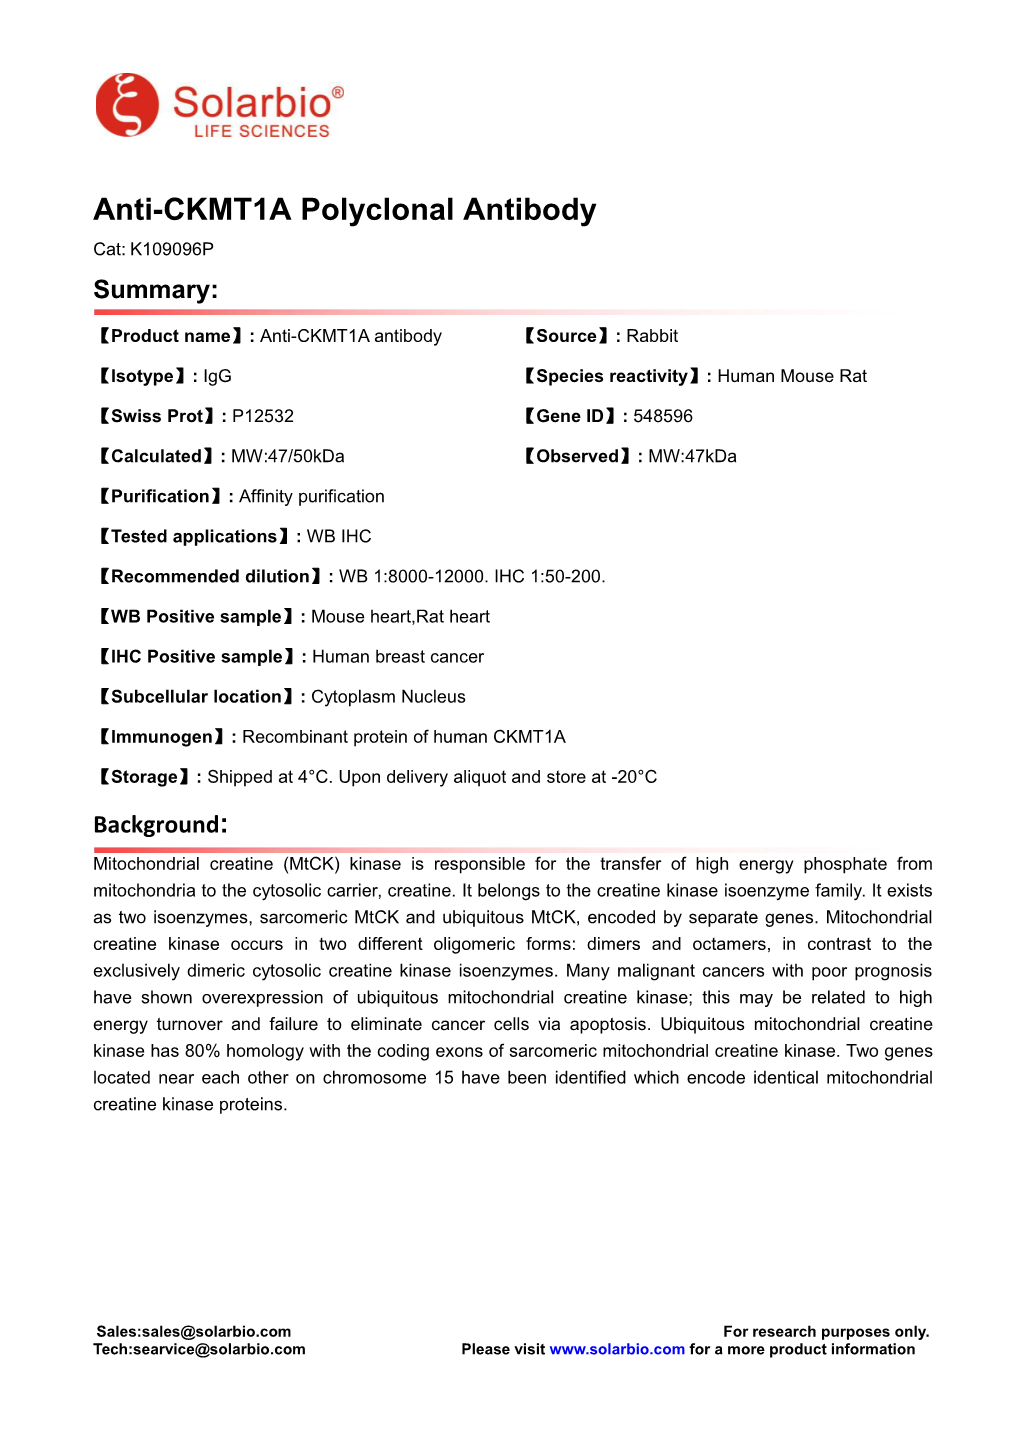 Anti-CKMT1A Polyclonal Antibody Cat: K109096P Summary